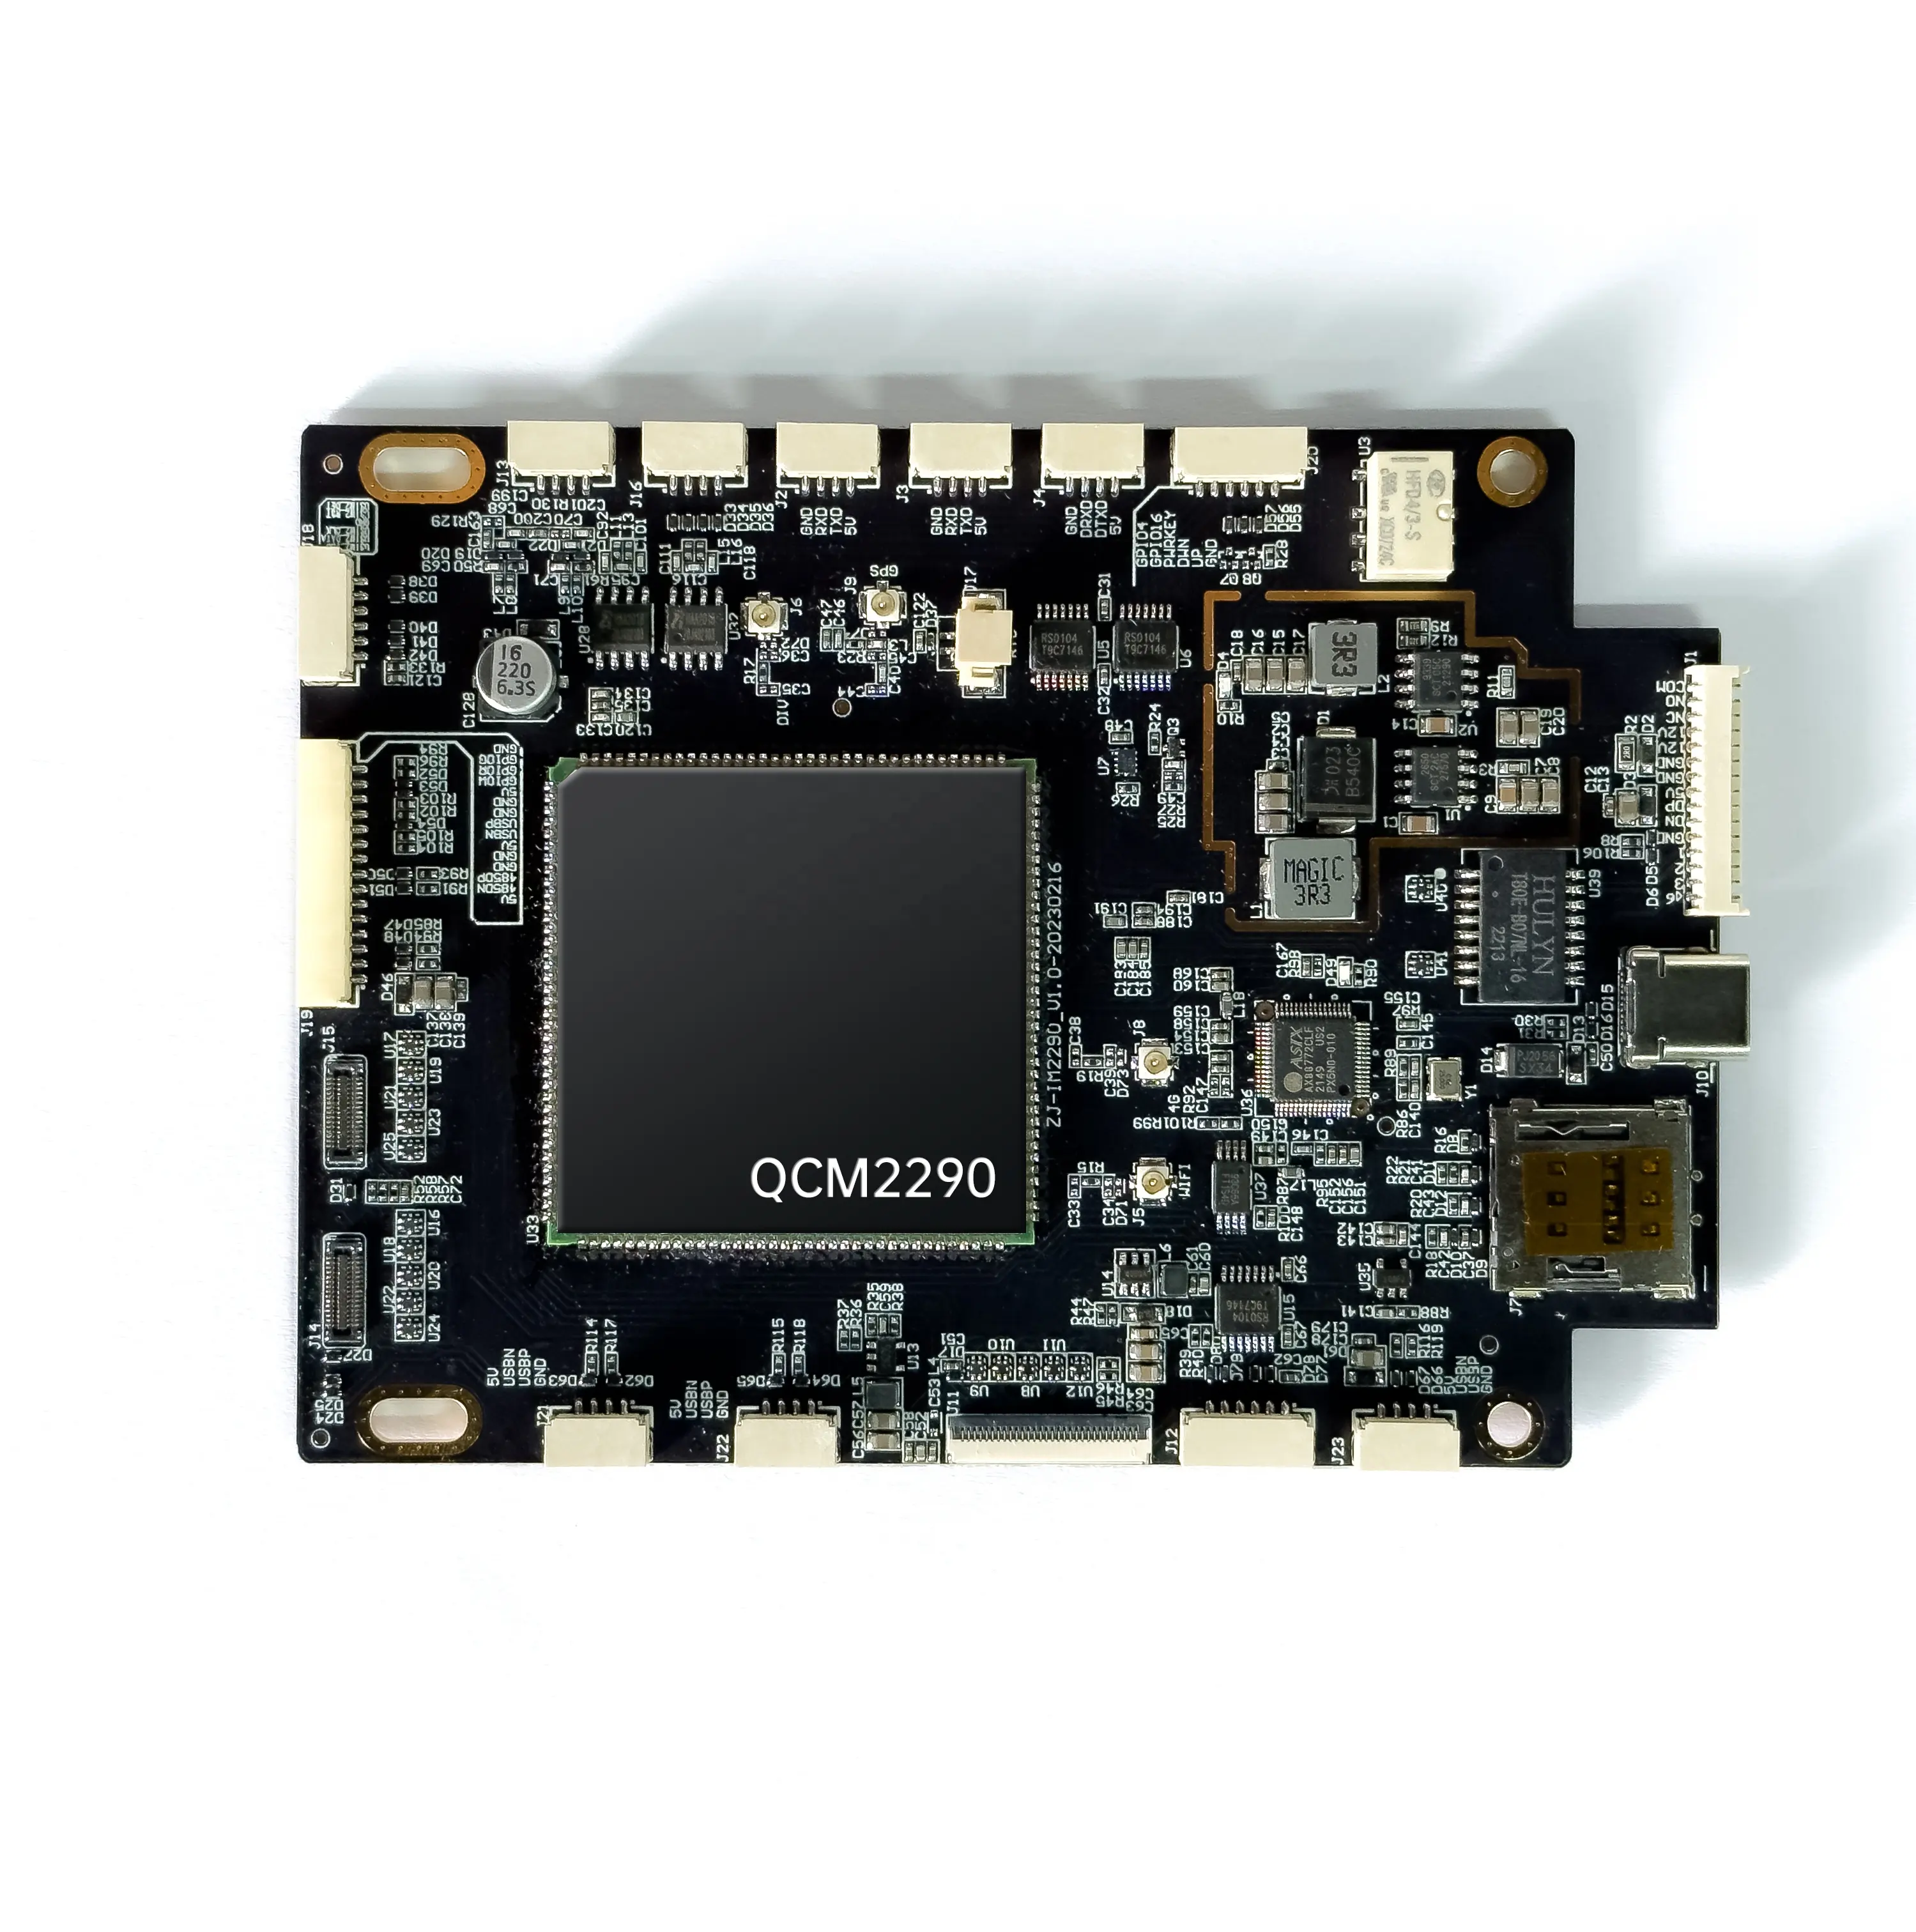 Qualcomm qcm2290 לוח פיתוח אנדרואיד לוח gt290 עם תצוגת מגע עבור אמצע, pnd, pos, נתב, רכב חכם lte חתול 4 mainboard